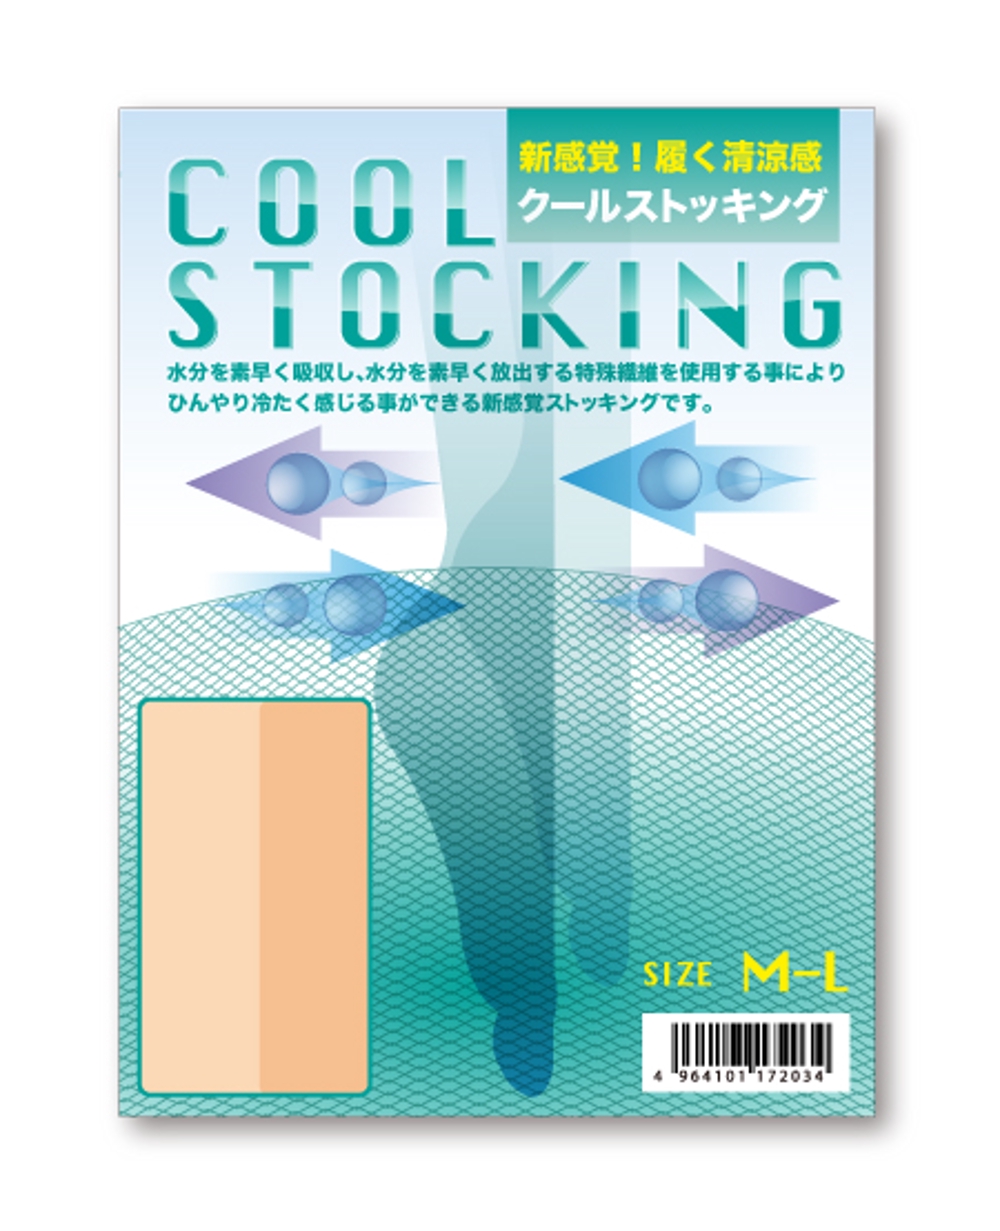 coolstocking3.jpg